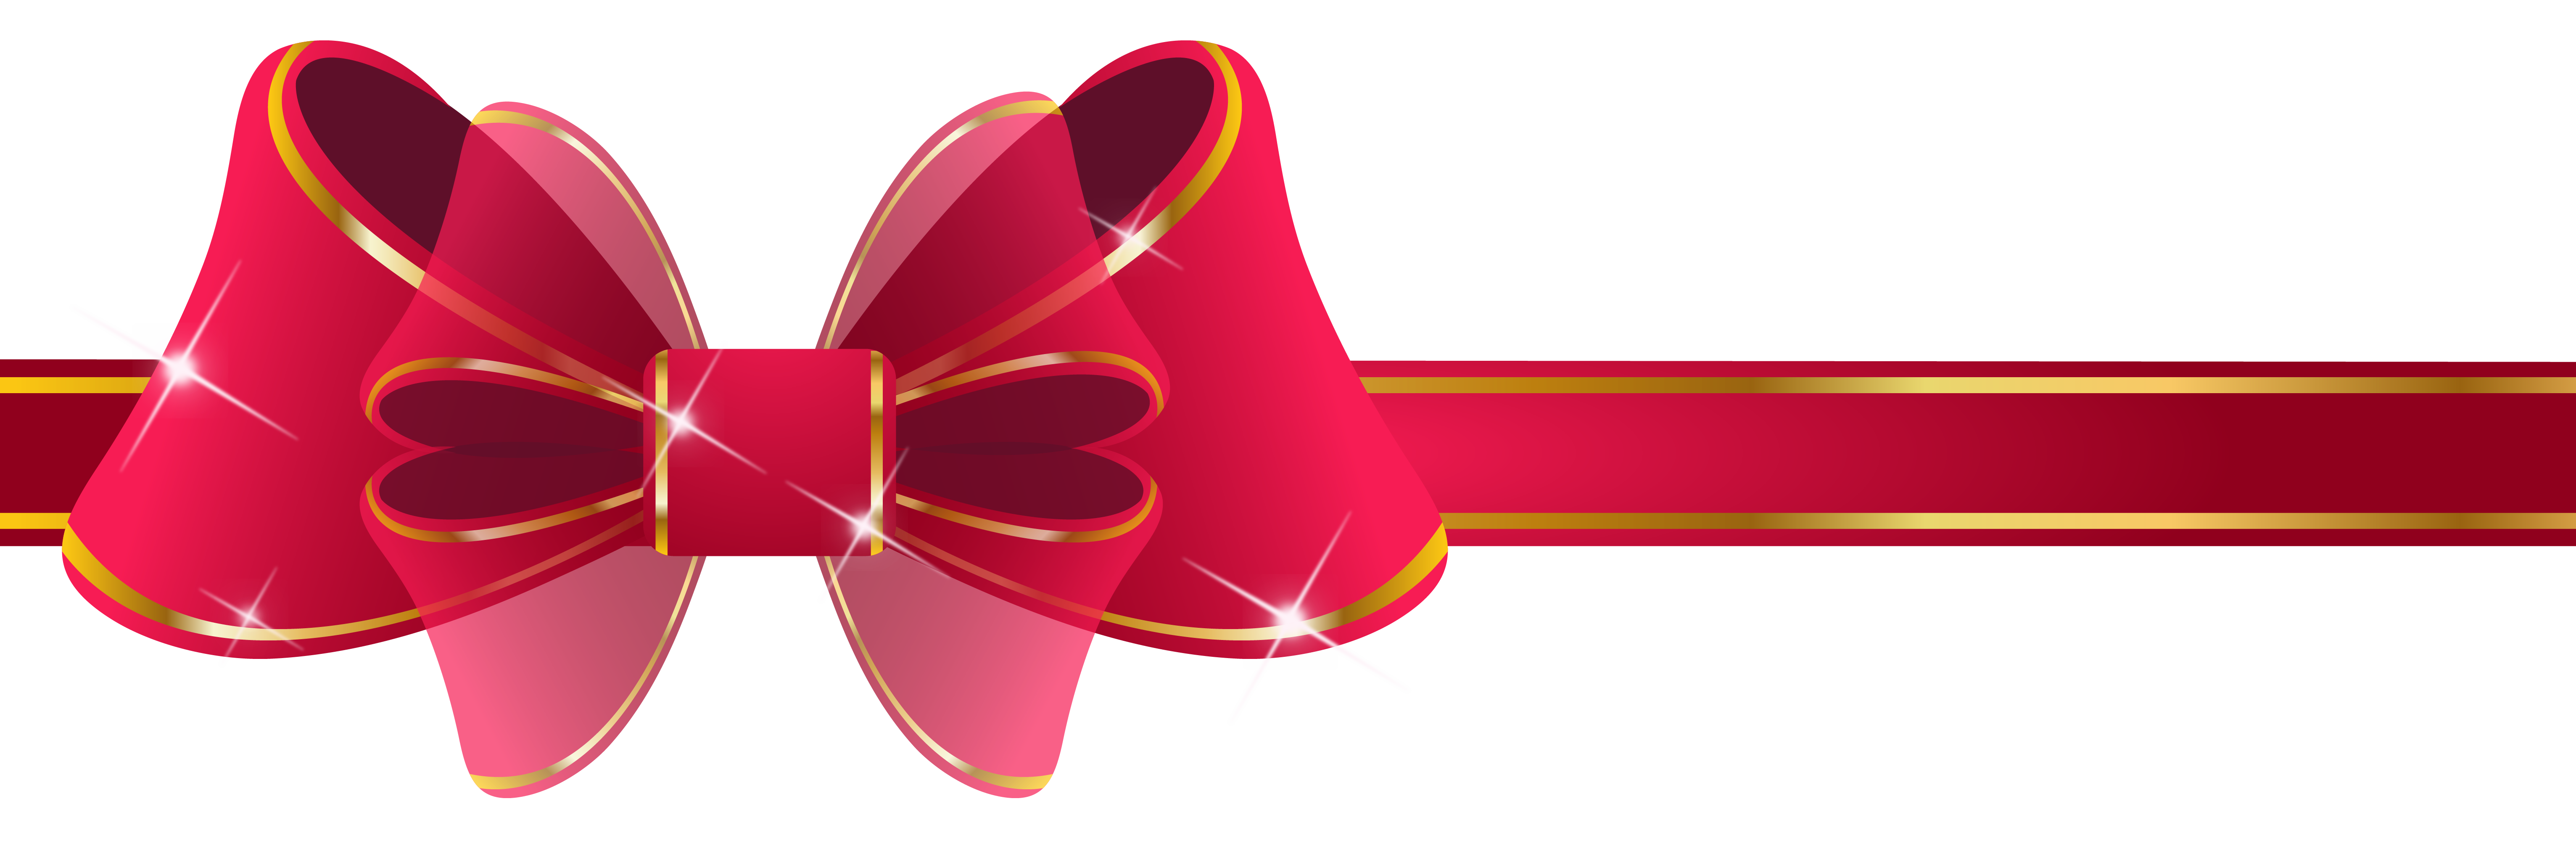 Clipart border ribbon. Beautiful red png image